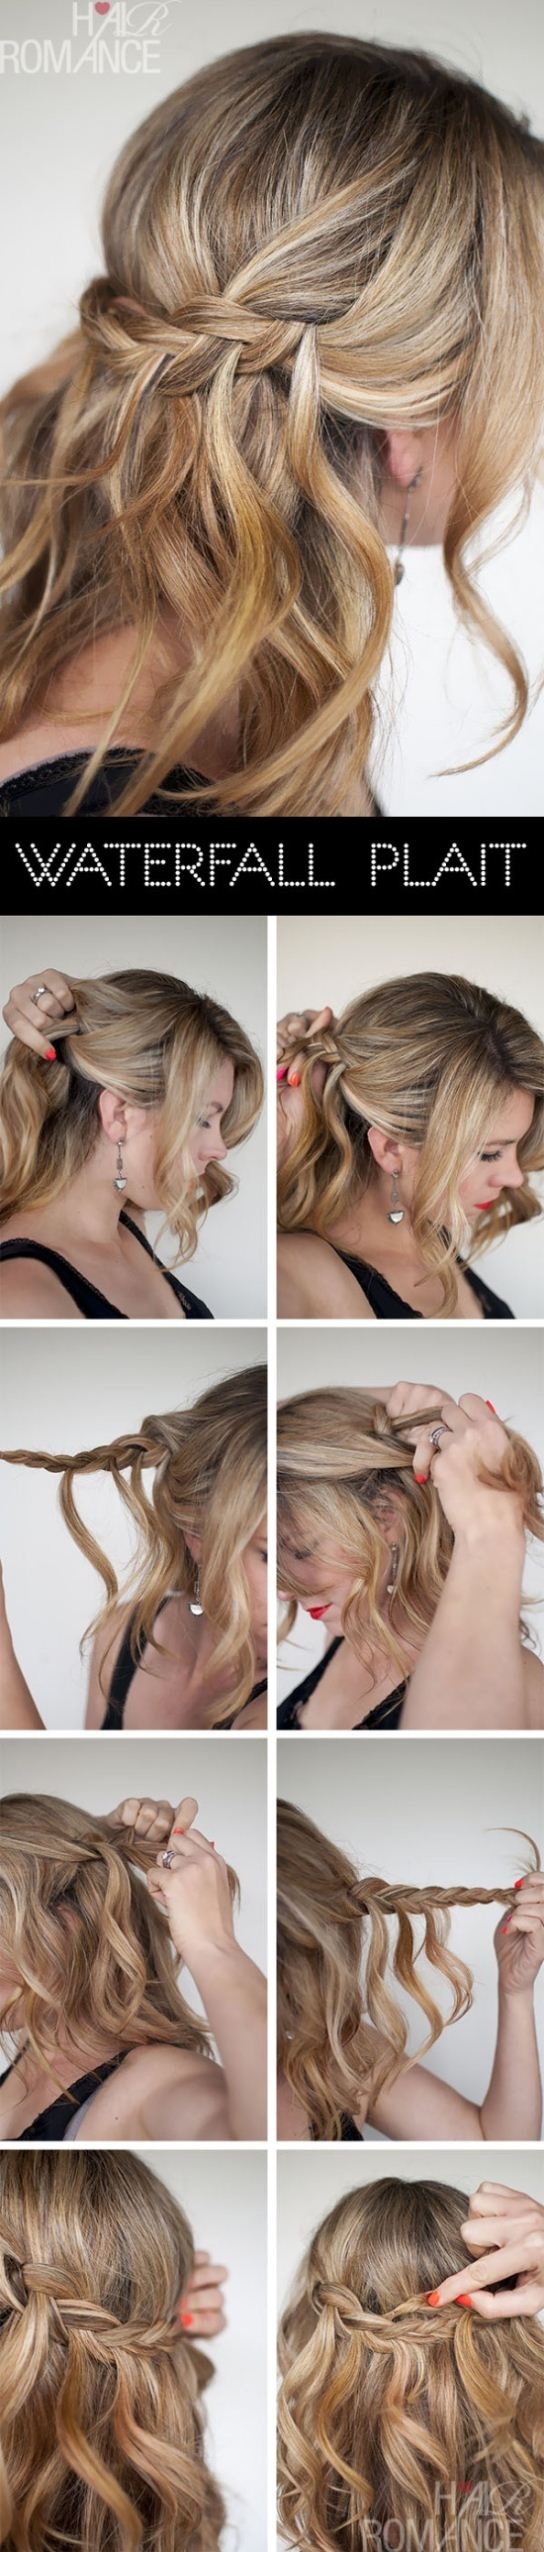 DIY waterfall braid hairstyle over